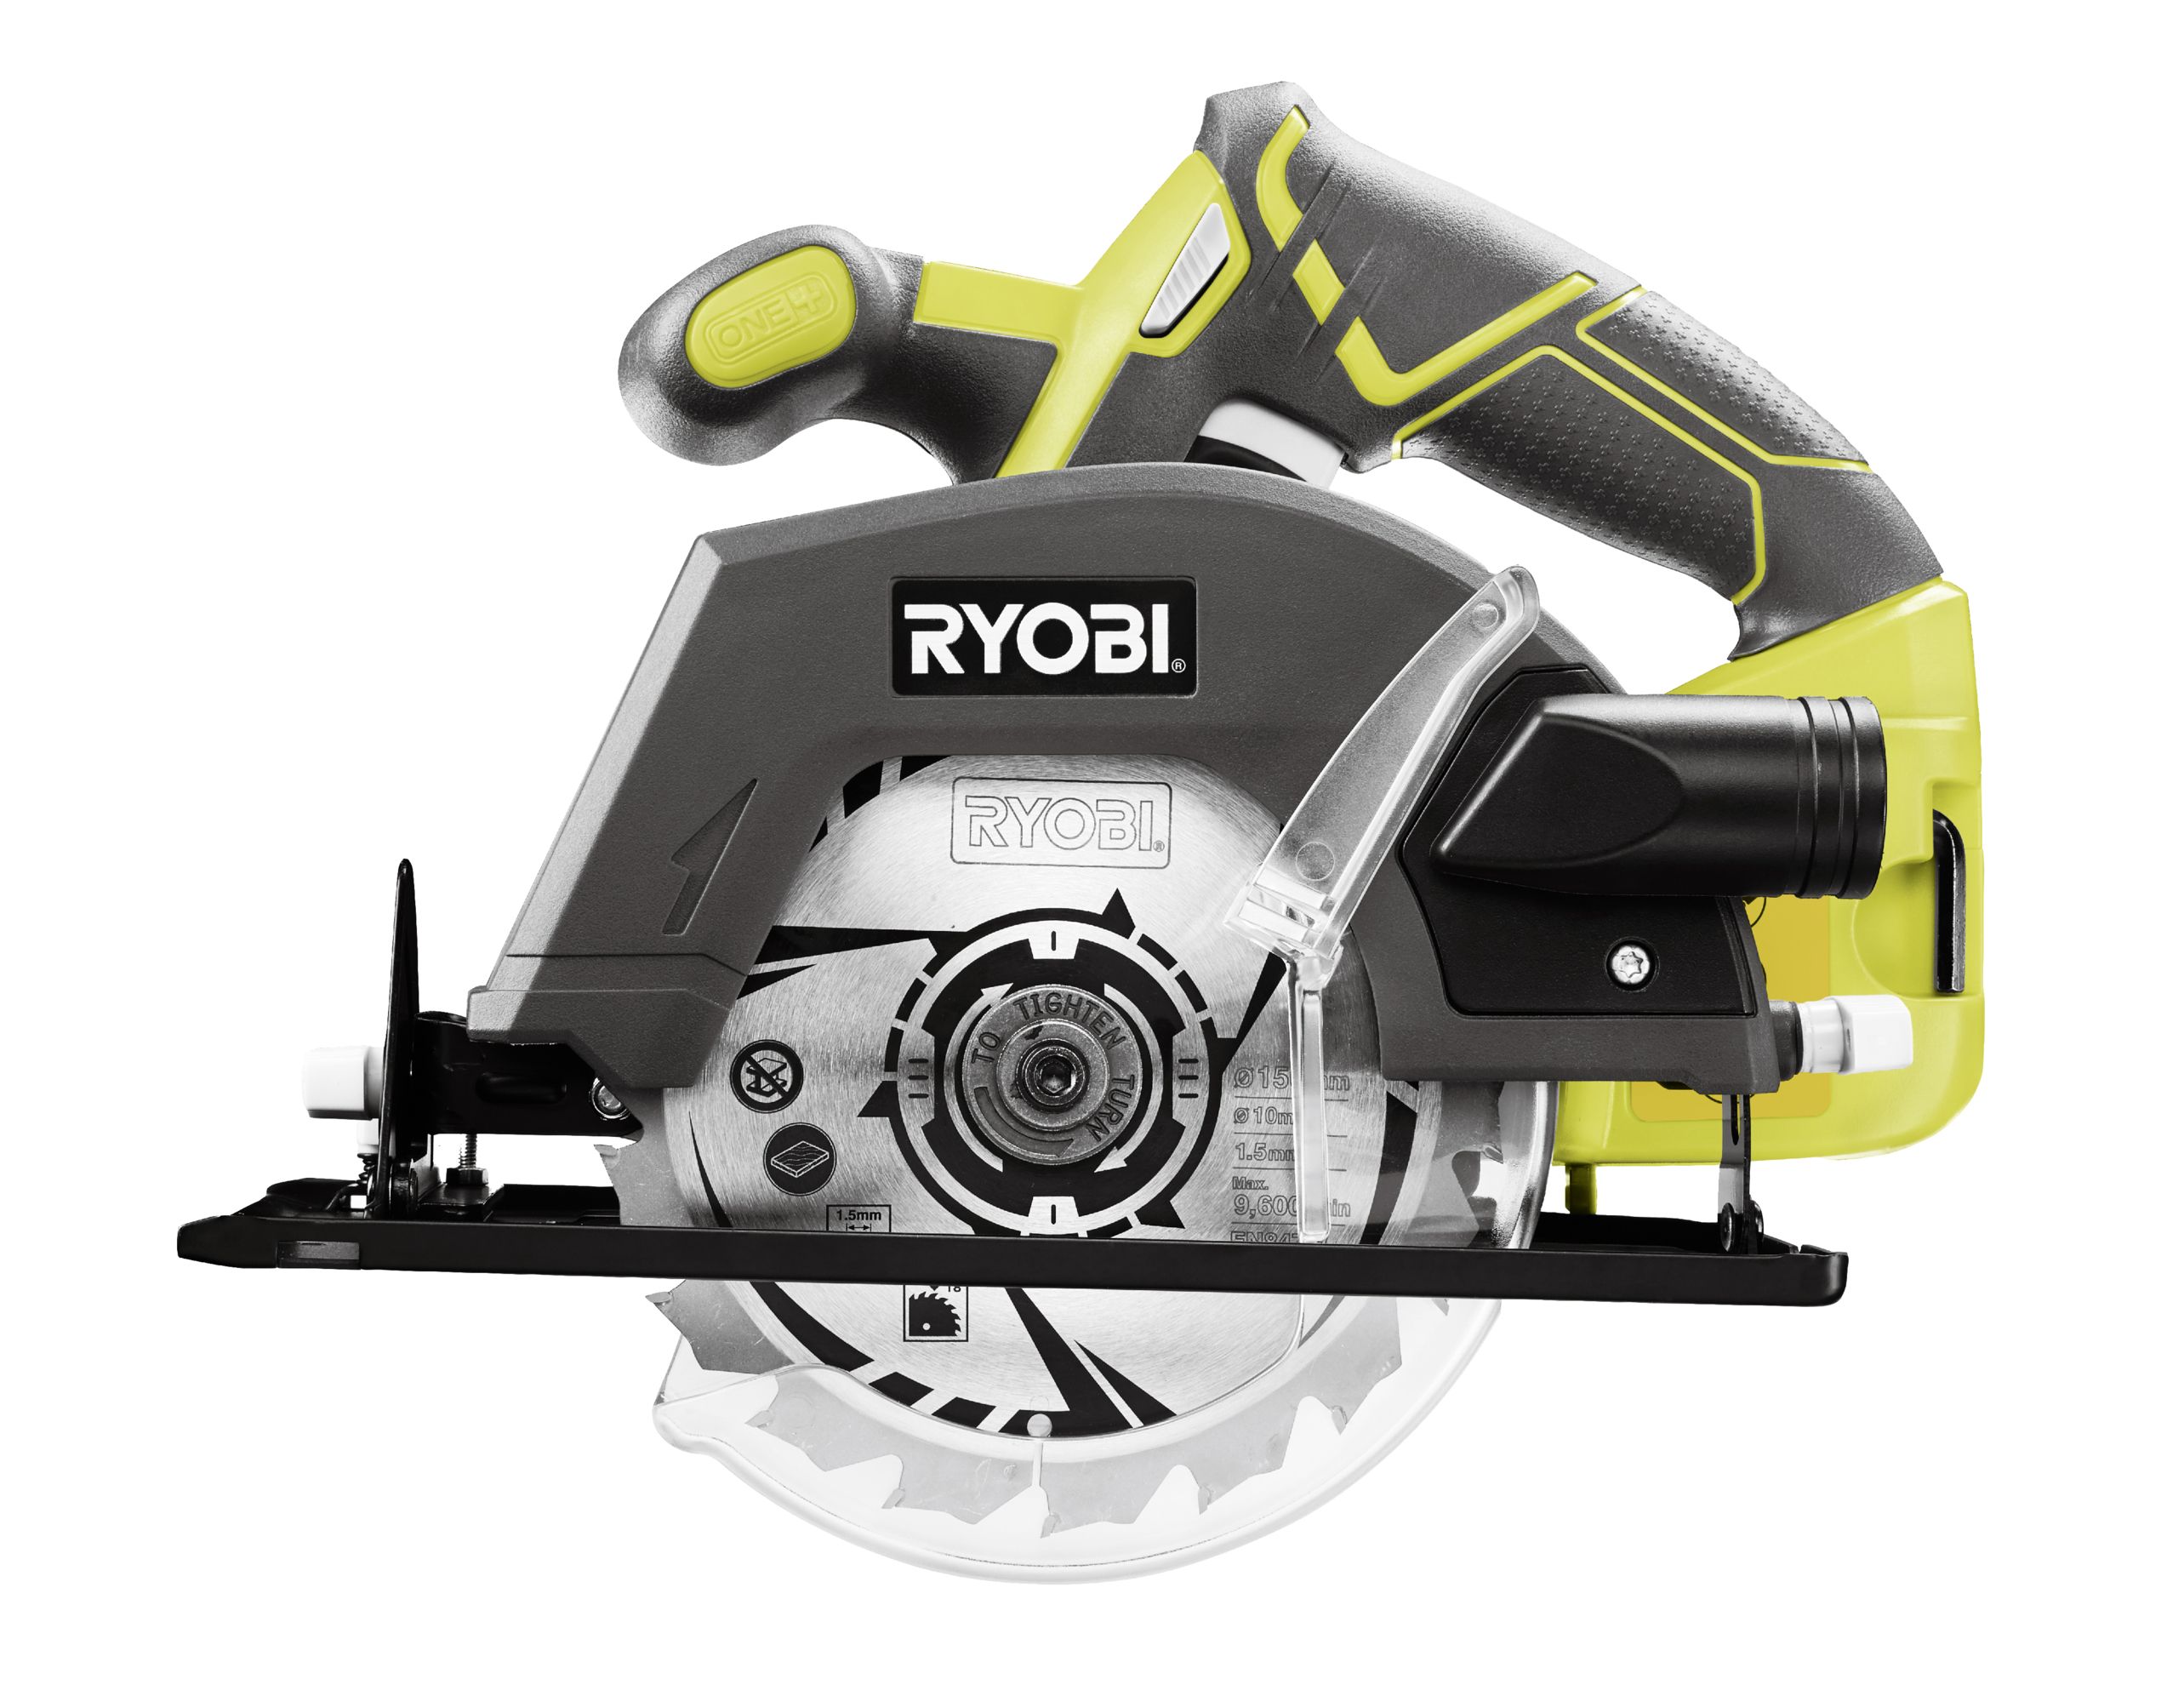 Ryobi ONE+ 18V 150mm Cordless Circular saw (Bare Tool) - R18CSP